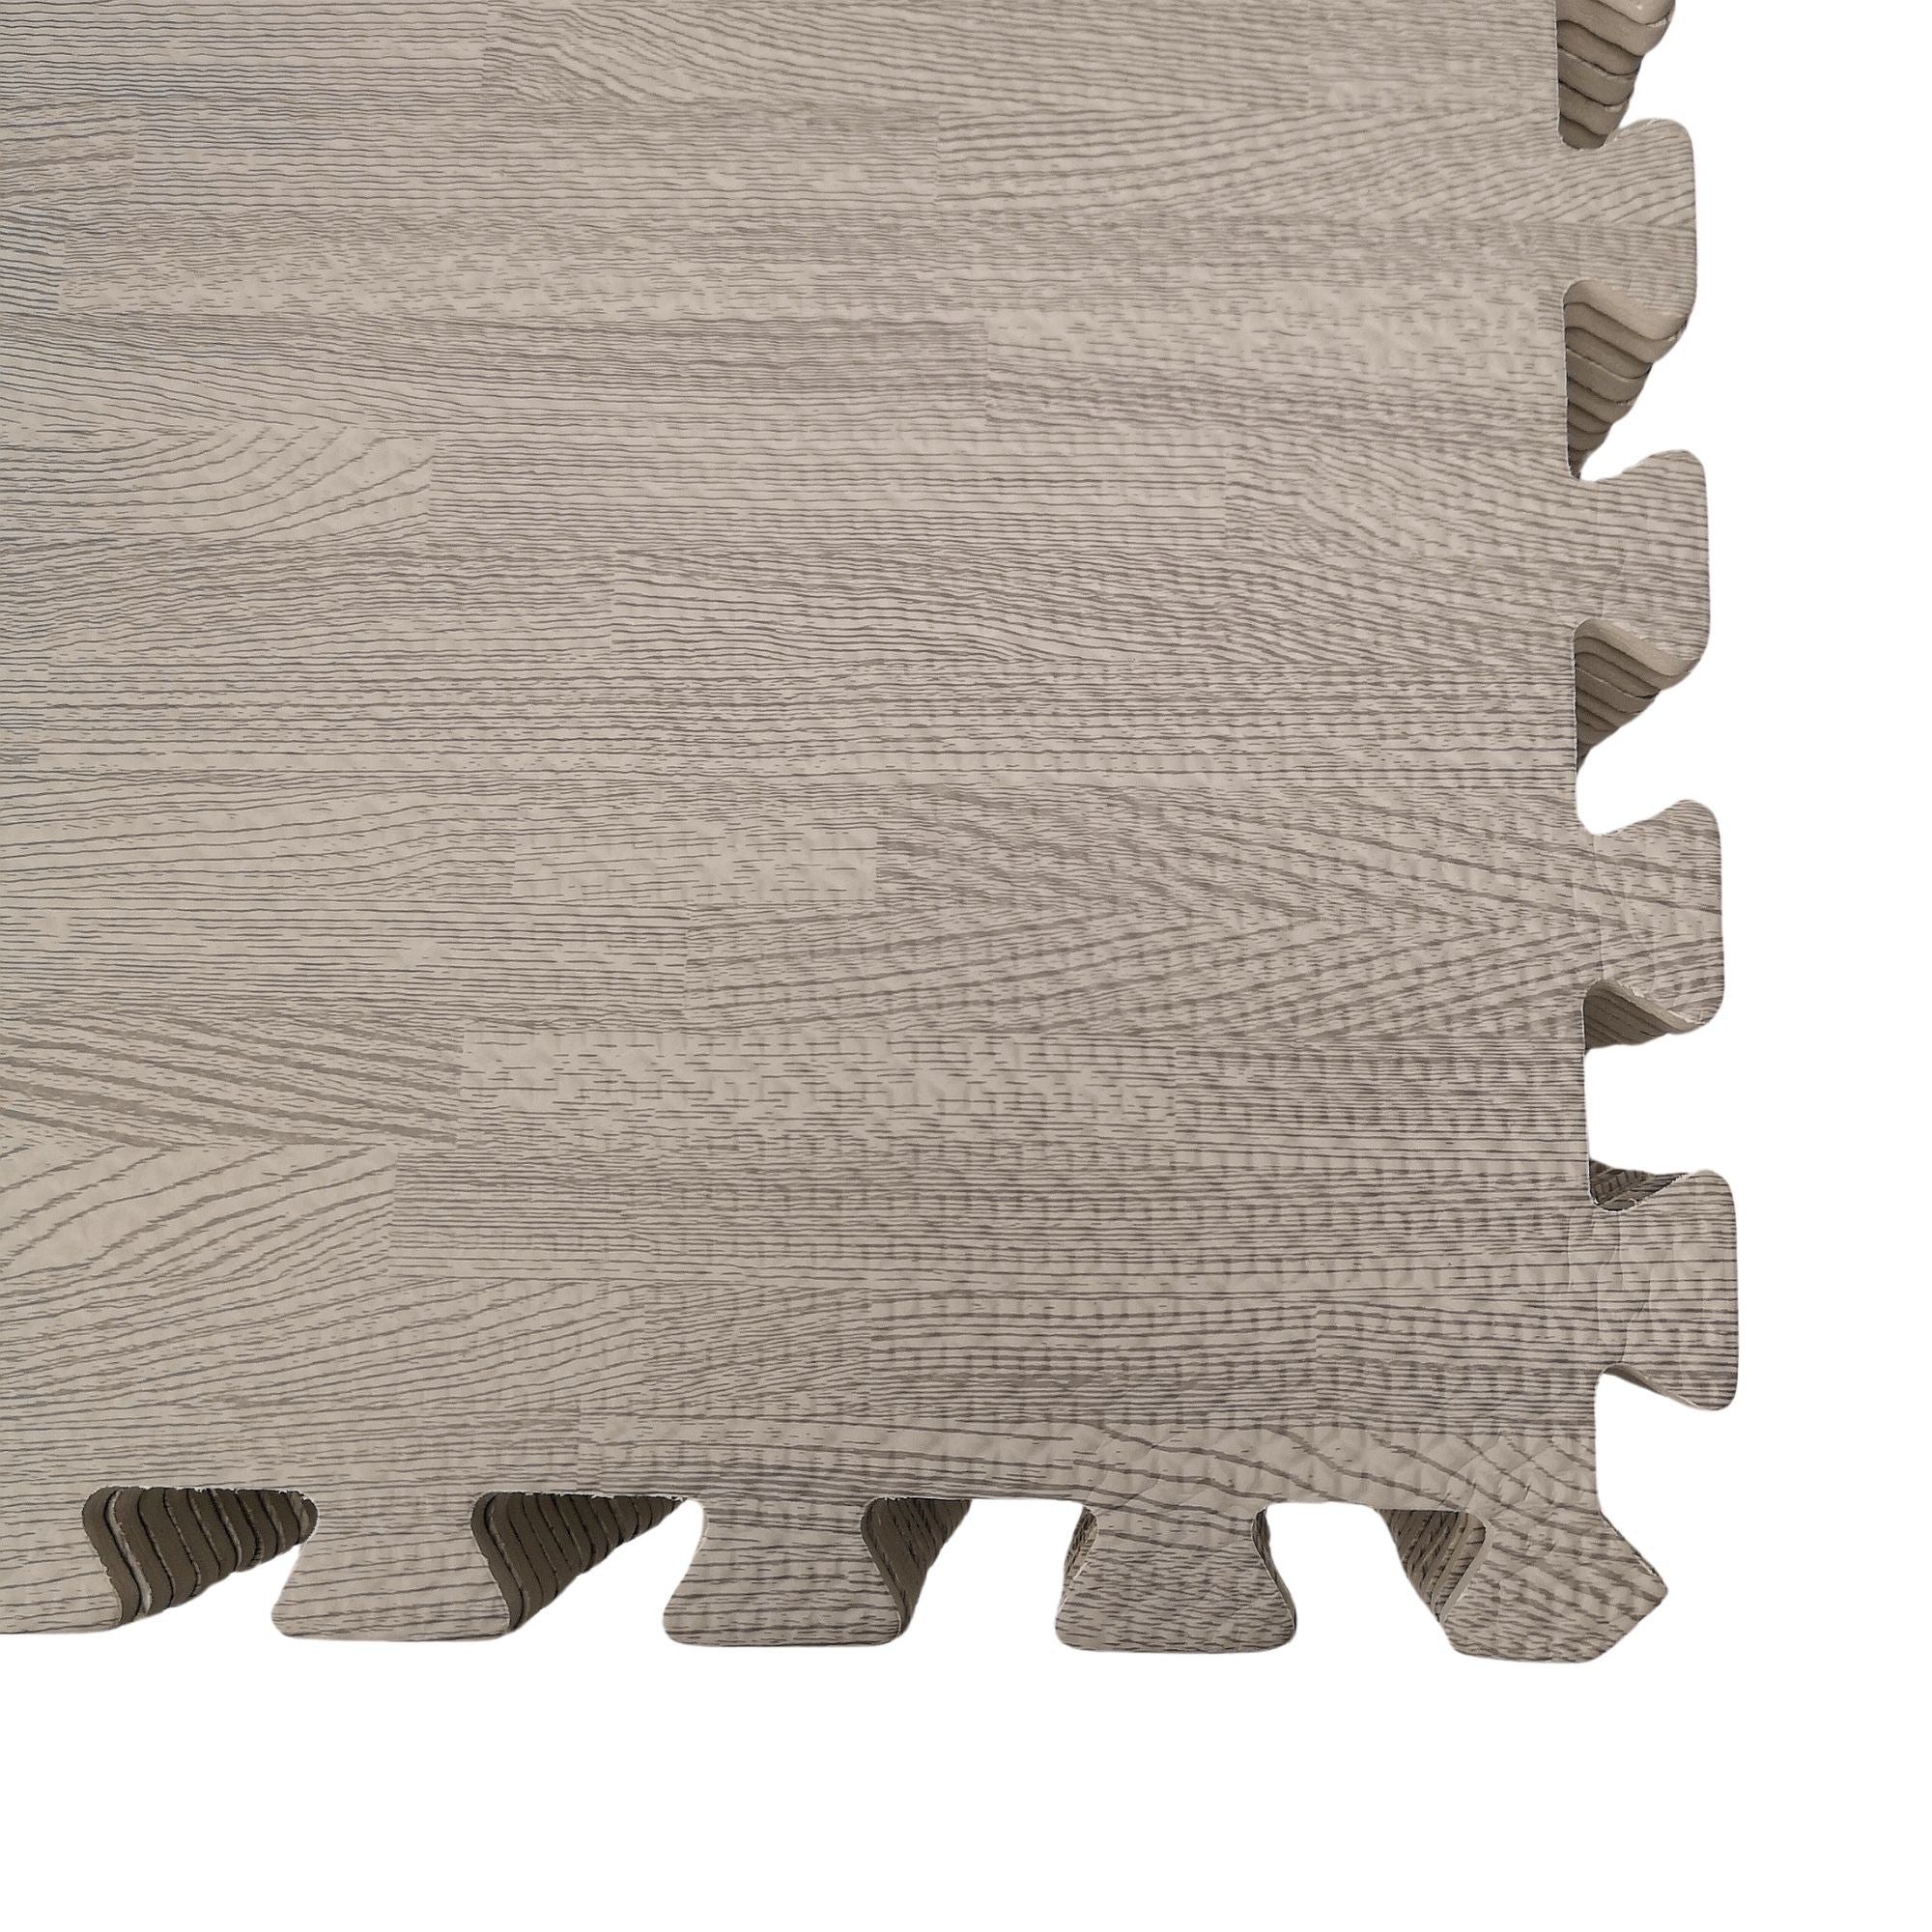 32 Piece Grey Wood Effect EVA Foam Floor Protective Floor Tiles / Mats 60x60cm Each Set For Gyms, Kitchens, Garages, Camping, Kids Play Matting, Floor Mats Set Covers 11.52 sqm (124 sq ft)